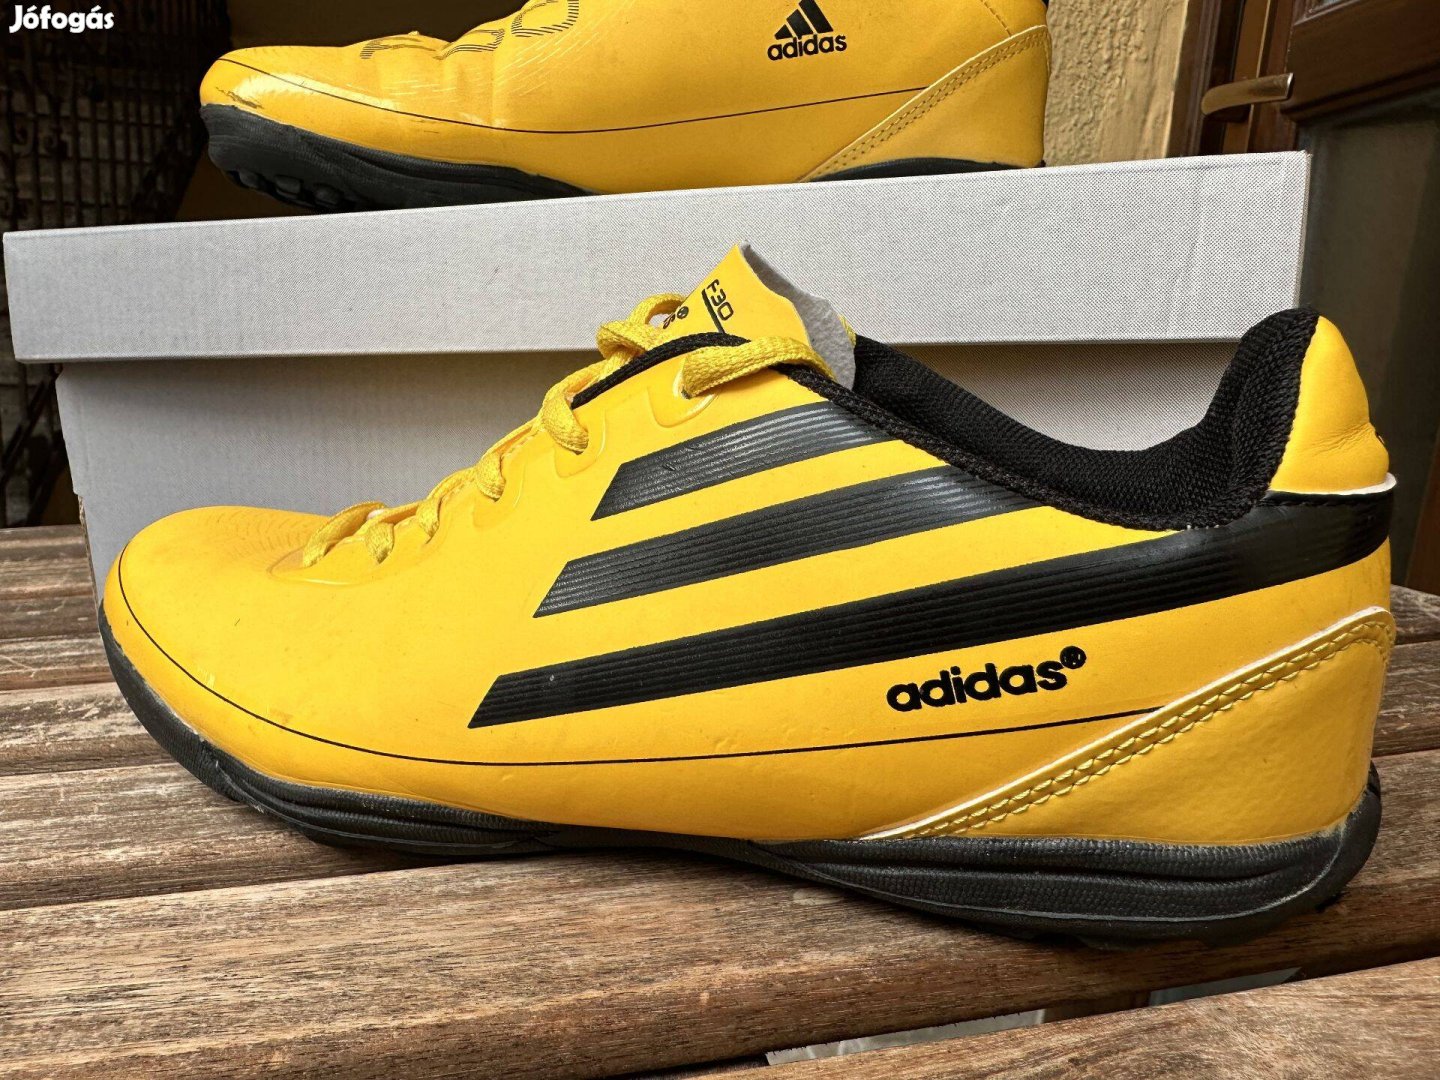 Adidas műfüves cipő (41-es méretben)